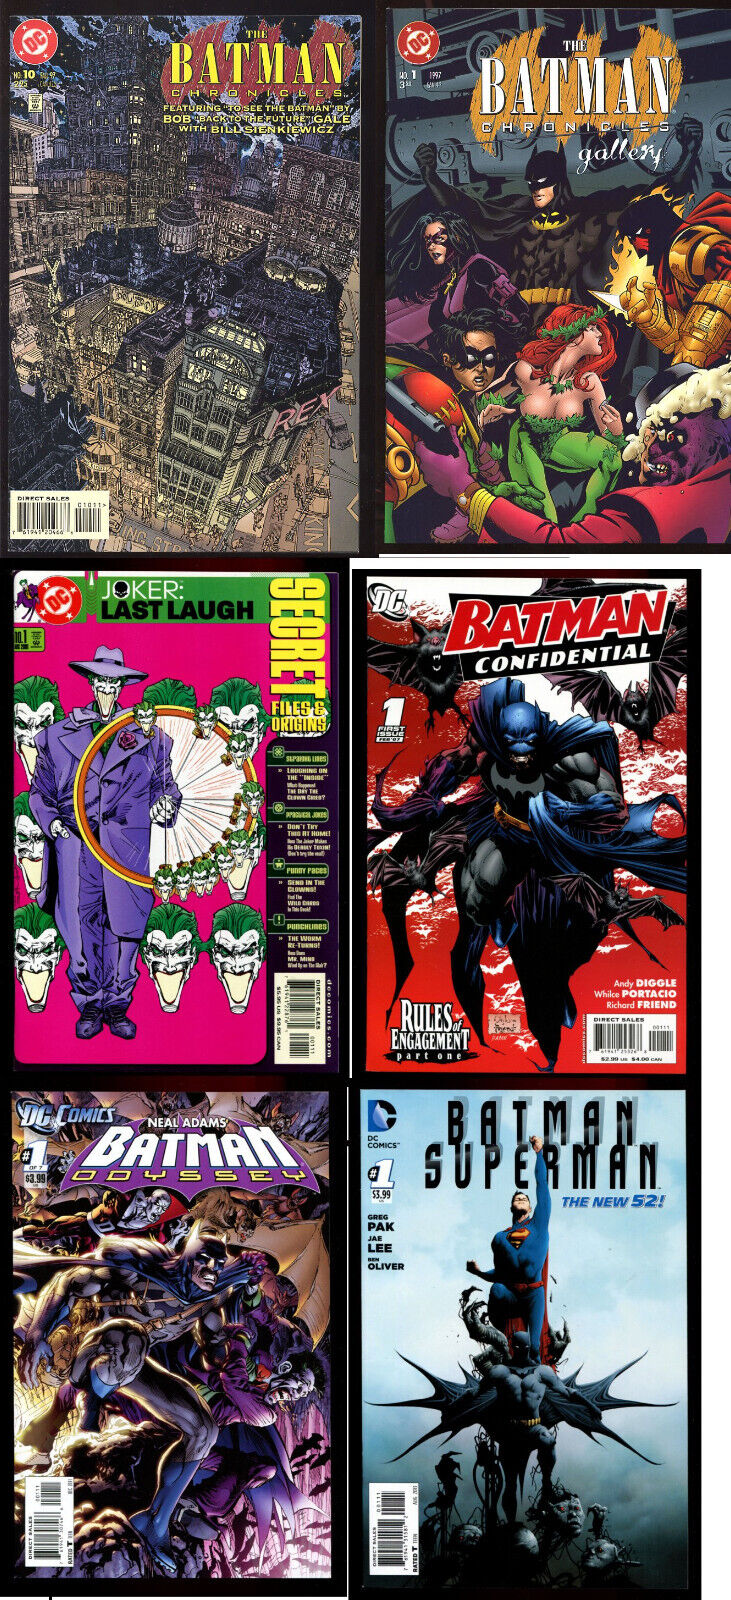 LAST CHANCE 42 issues BATMAN Chronicles, Joker, Confidential, Odyssey, Superman